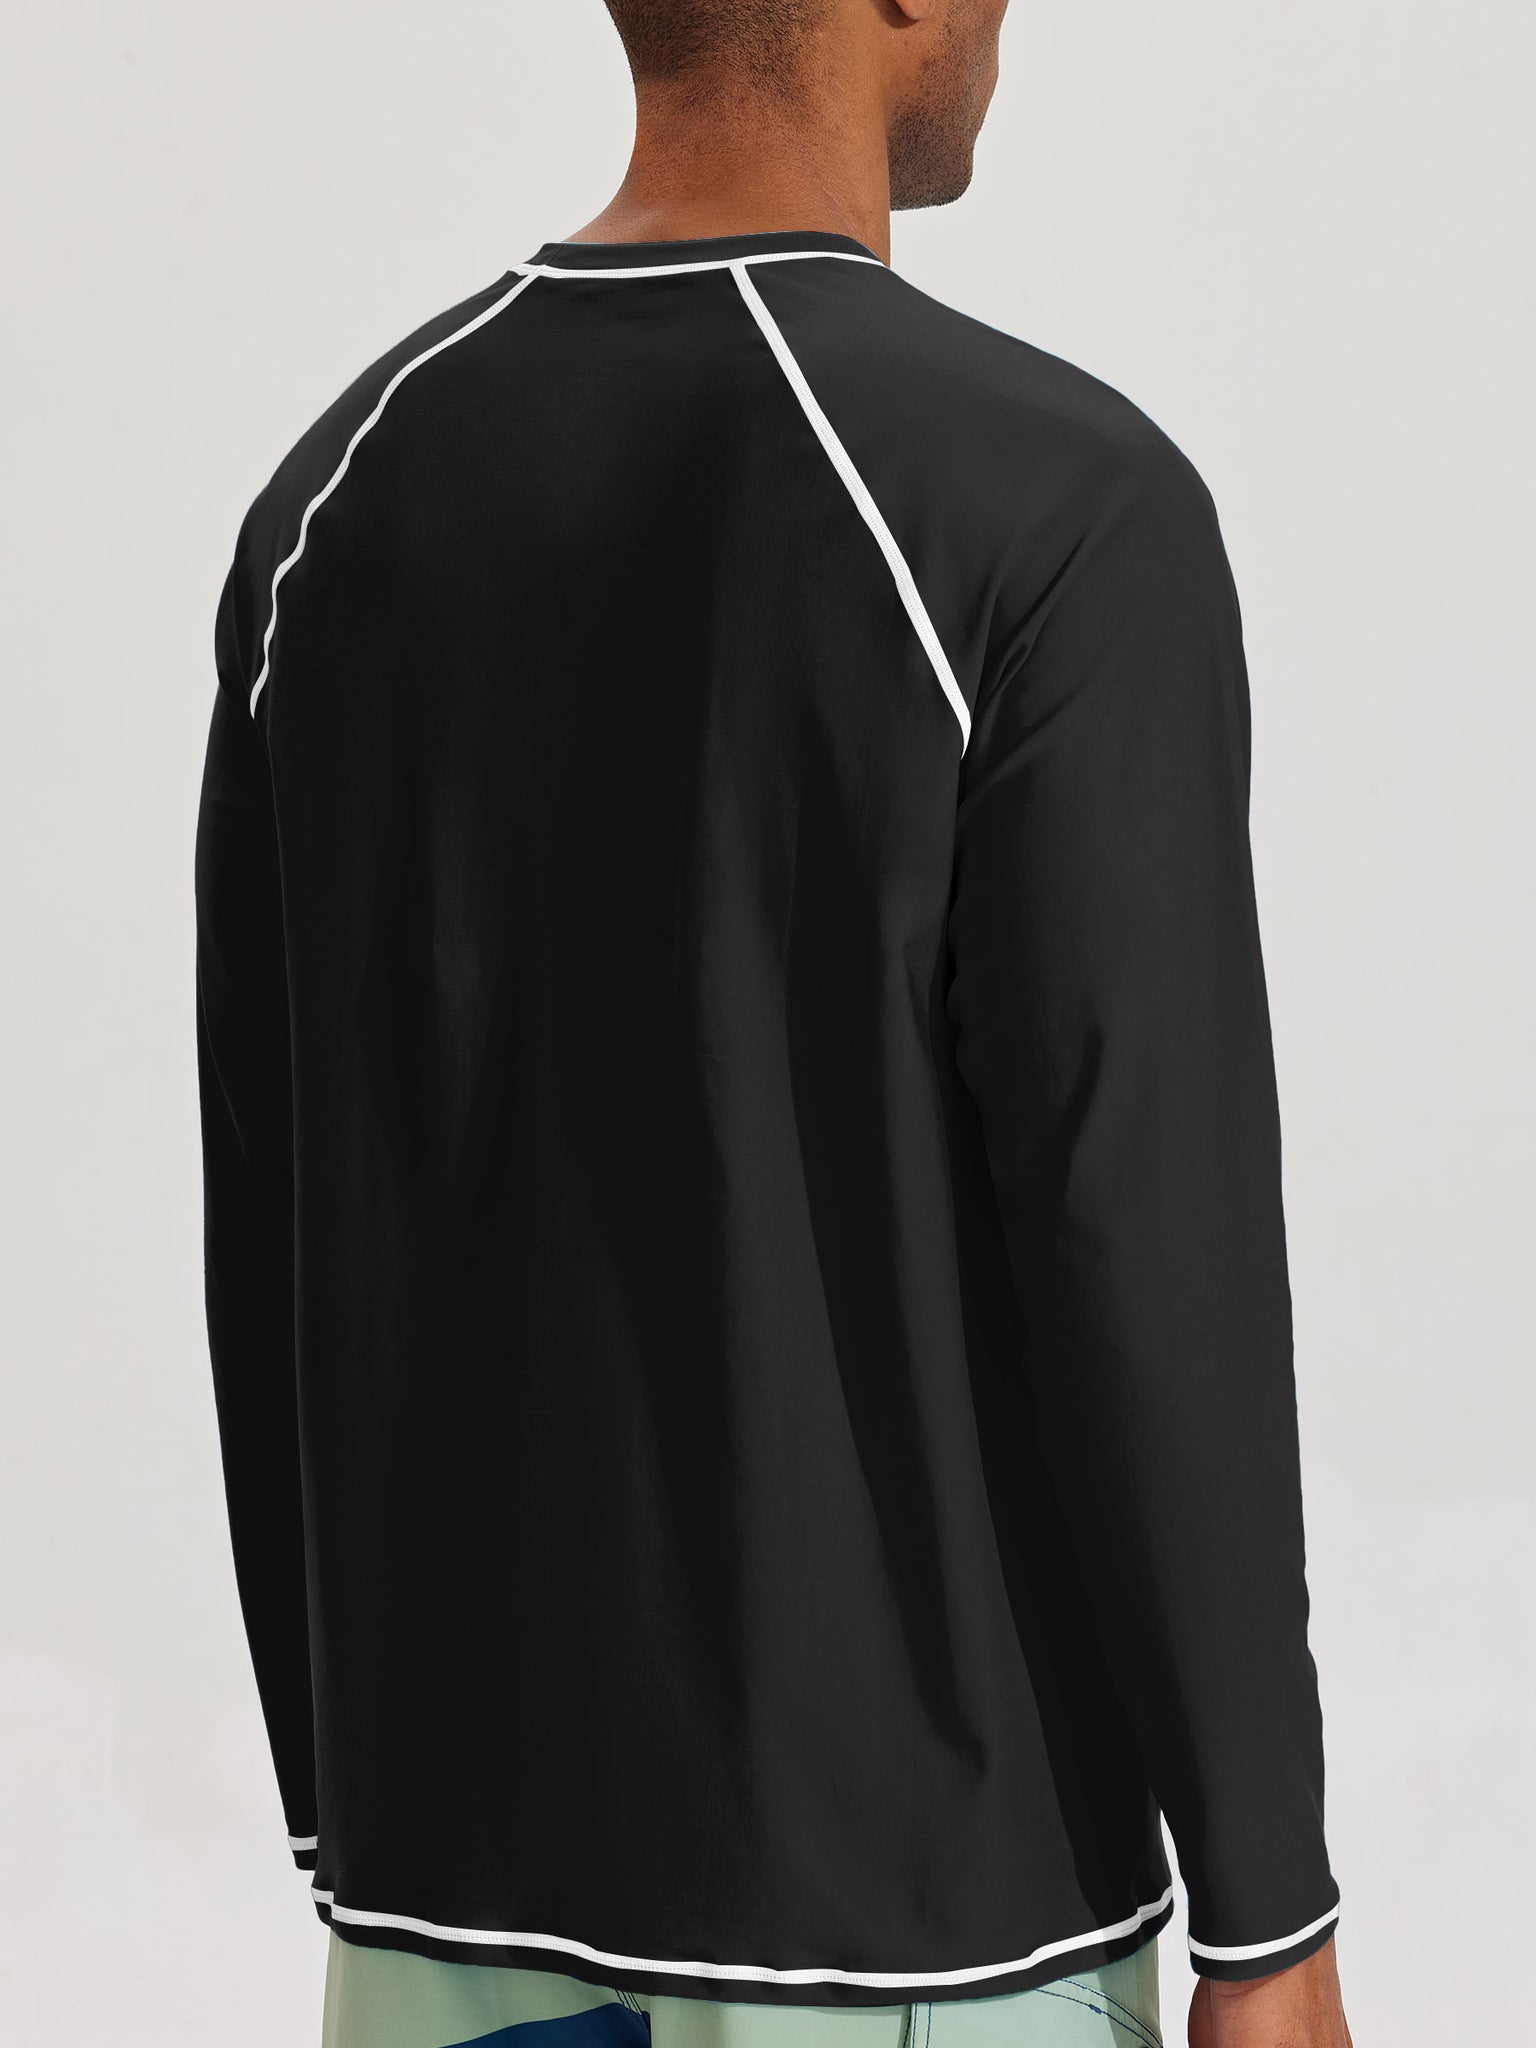 Men's Sun Protection Long Sleeve Shirt_Black_model3